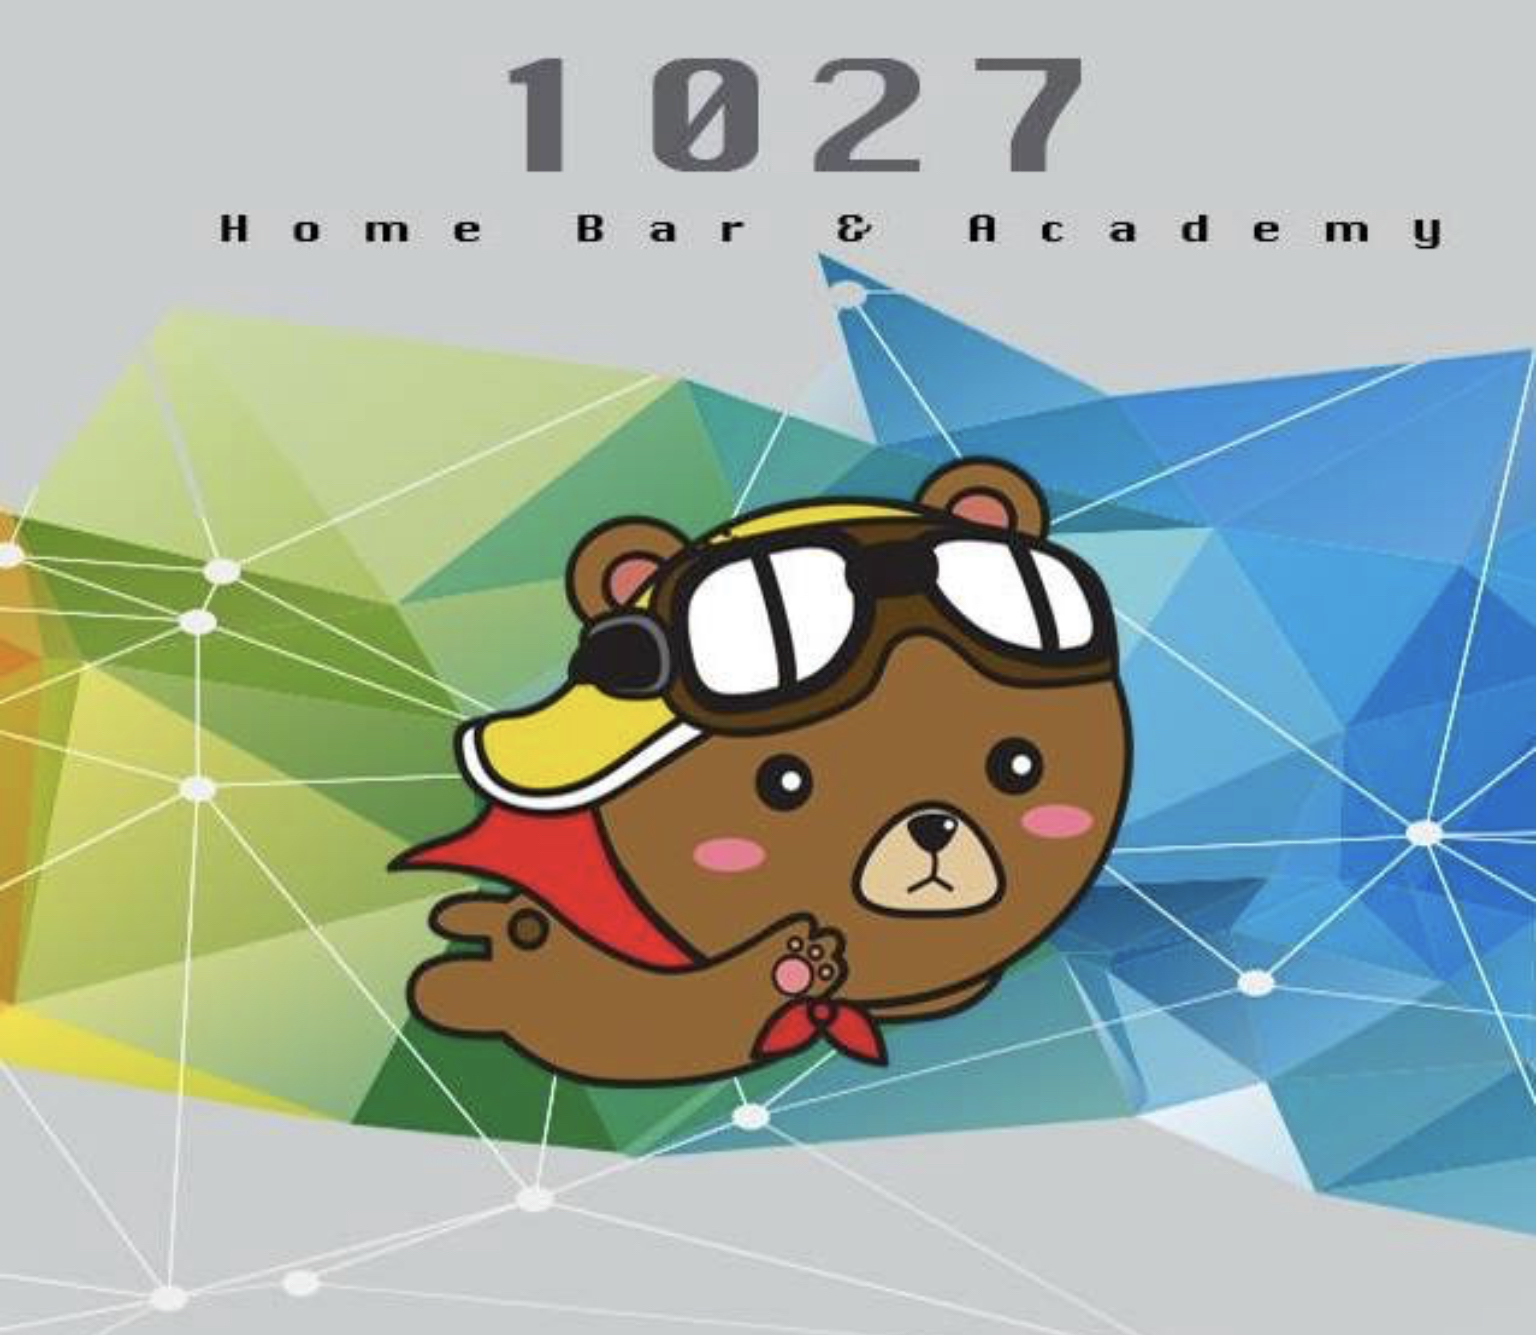 1027 Home bar